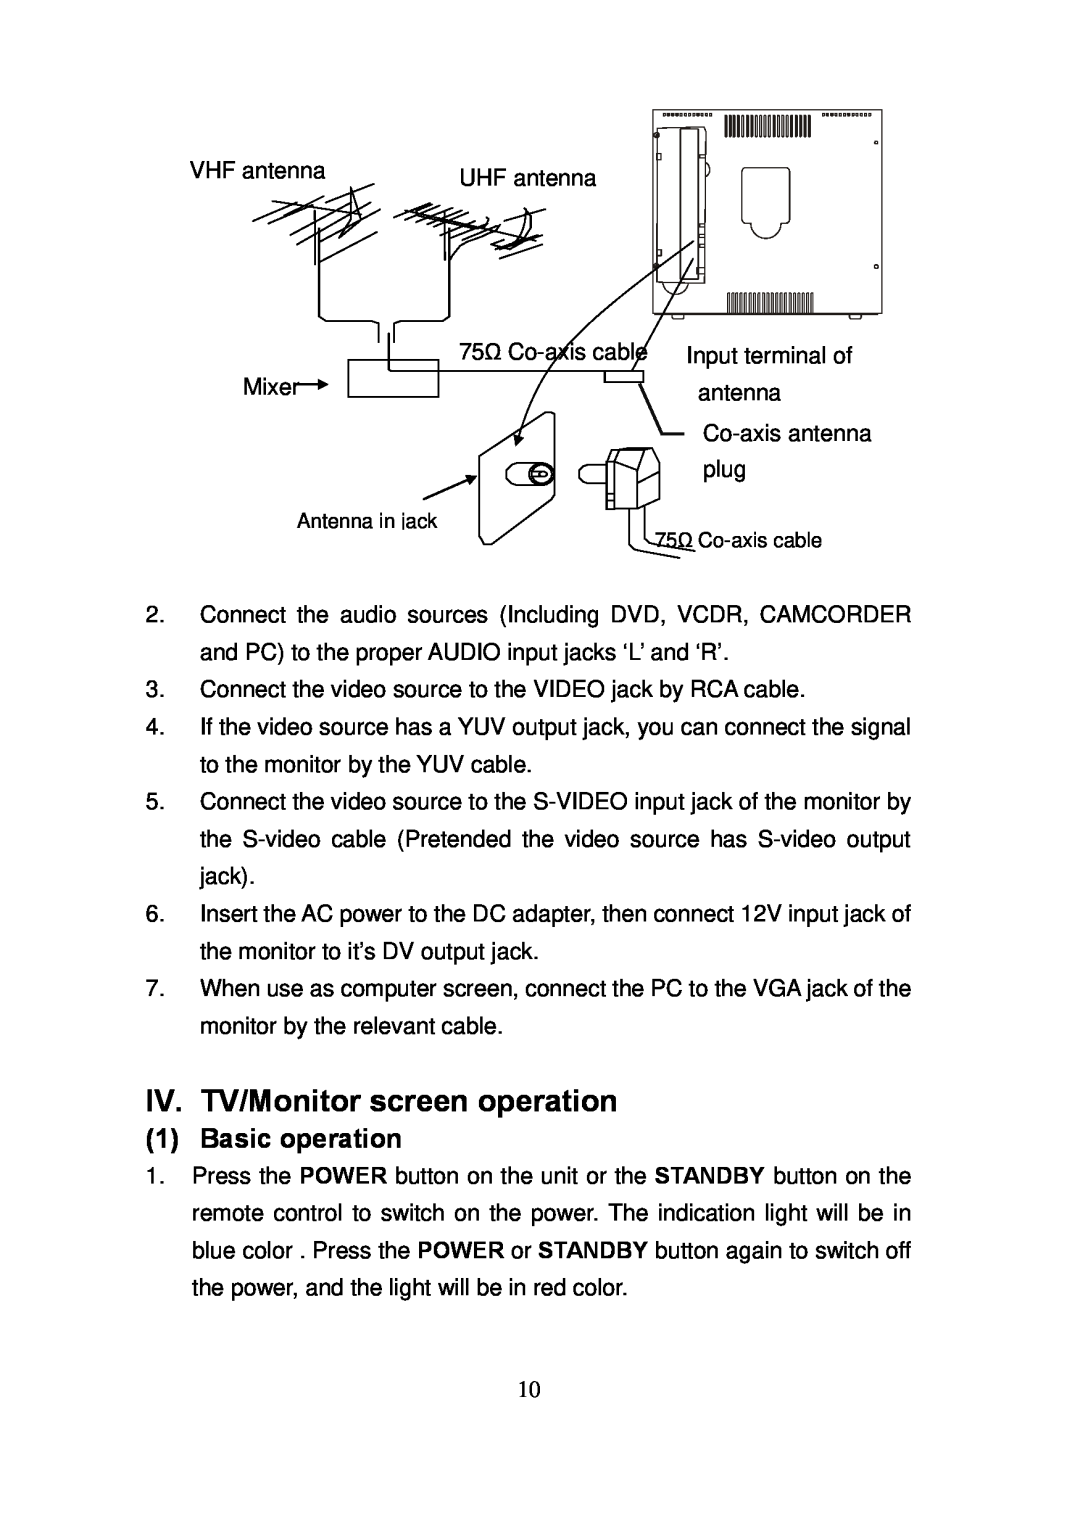 Grundig TR 1521, GLDCD1904WDVD manual IV. TV/Monitor screen operation, Basic operation 